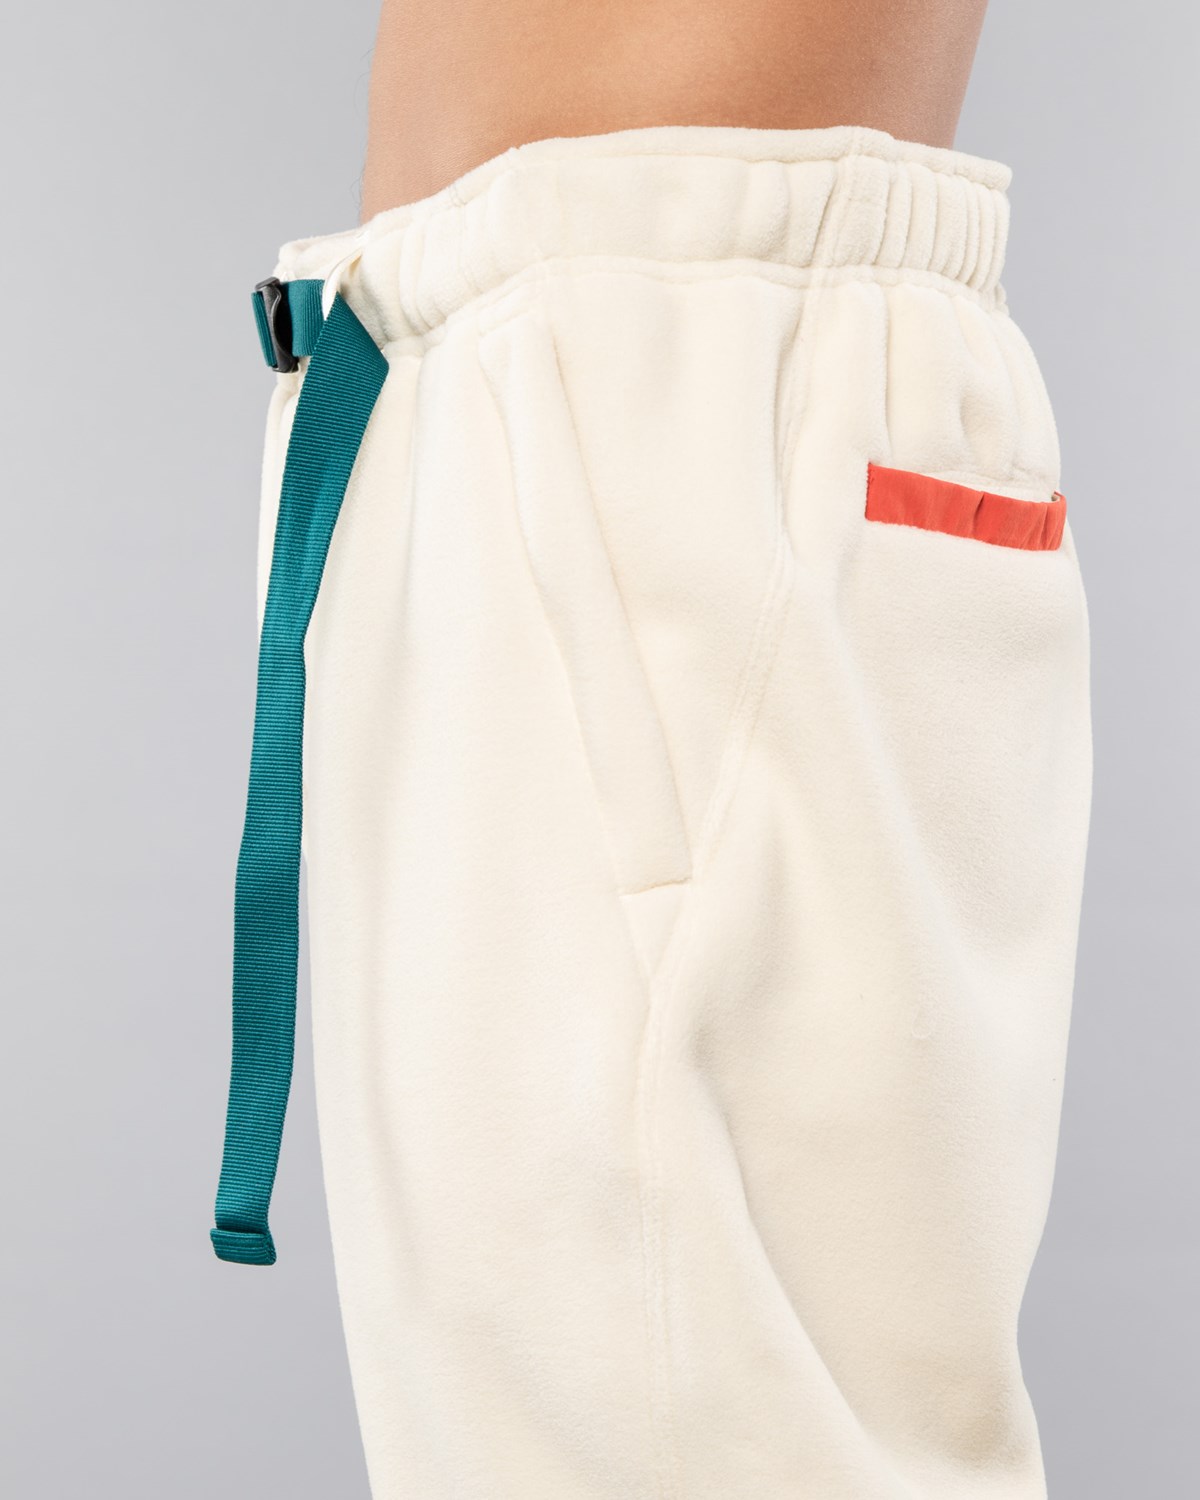 ACG Sherpa Fleece Pant Nike Bottoms Pants White